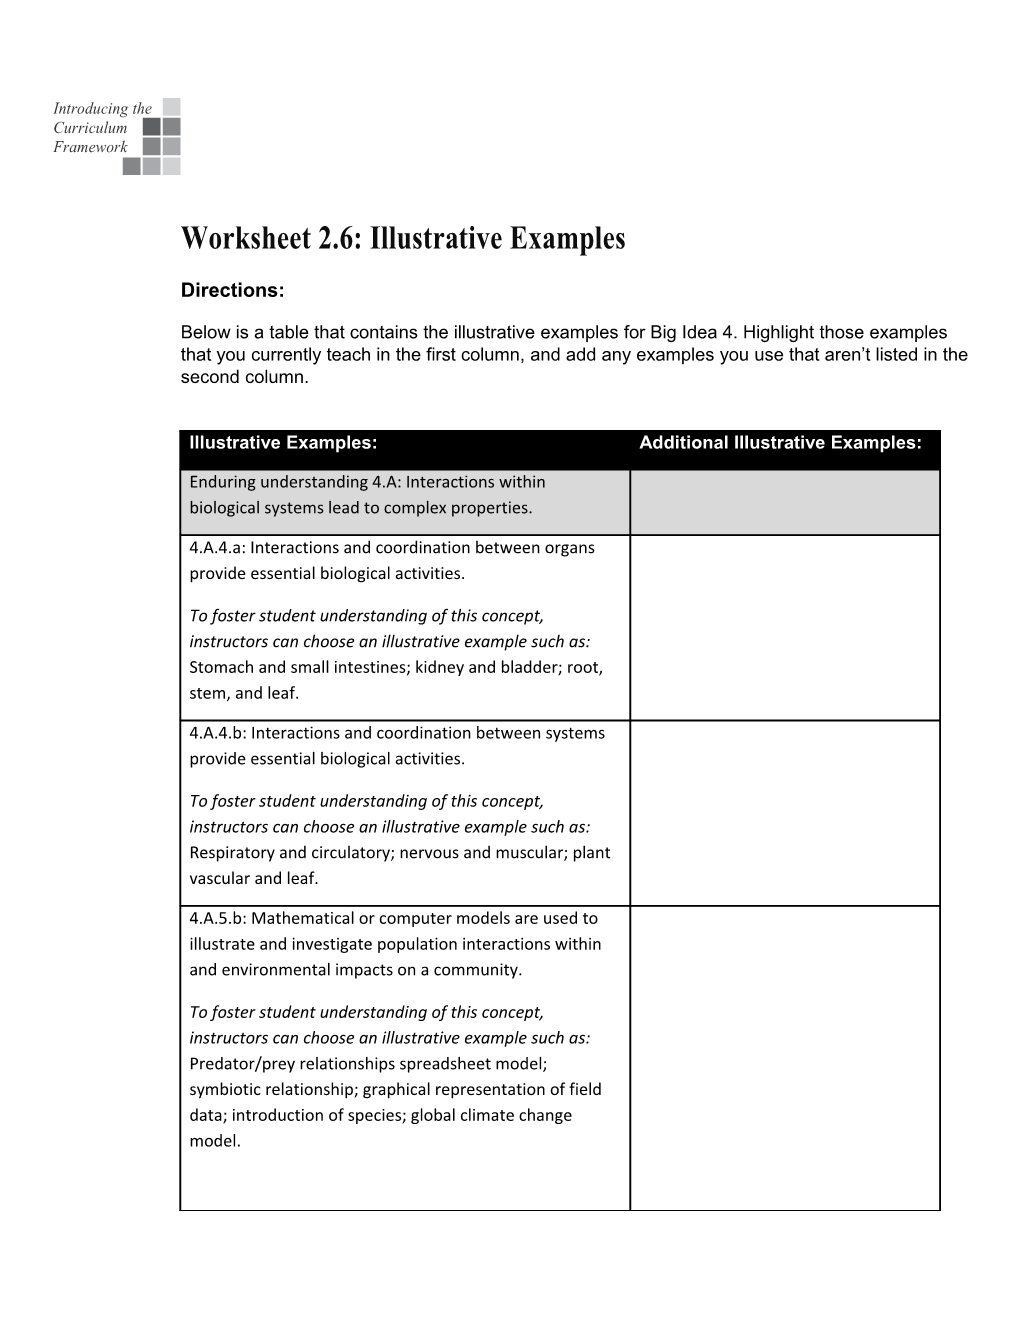 Worksheet 2.6: Illustrative Examples